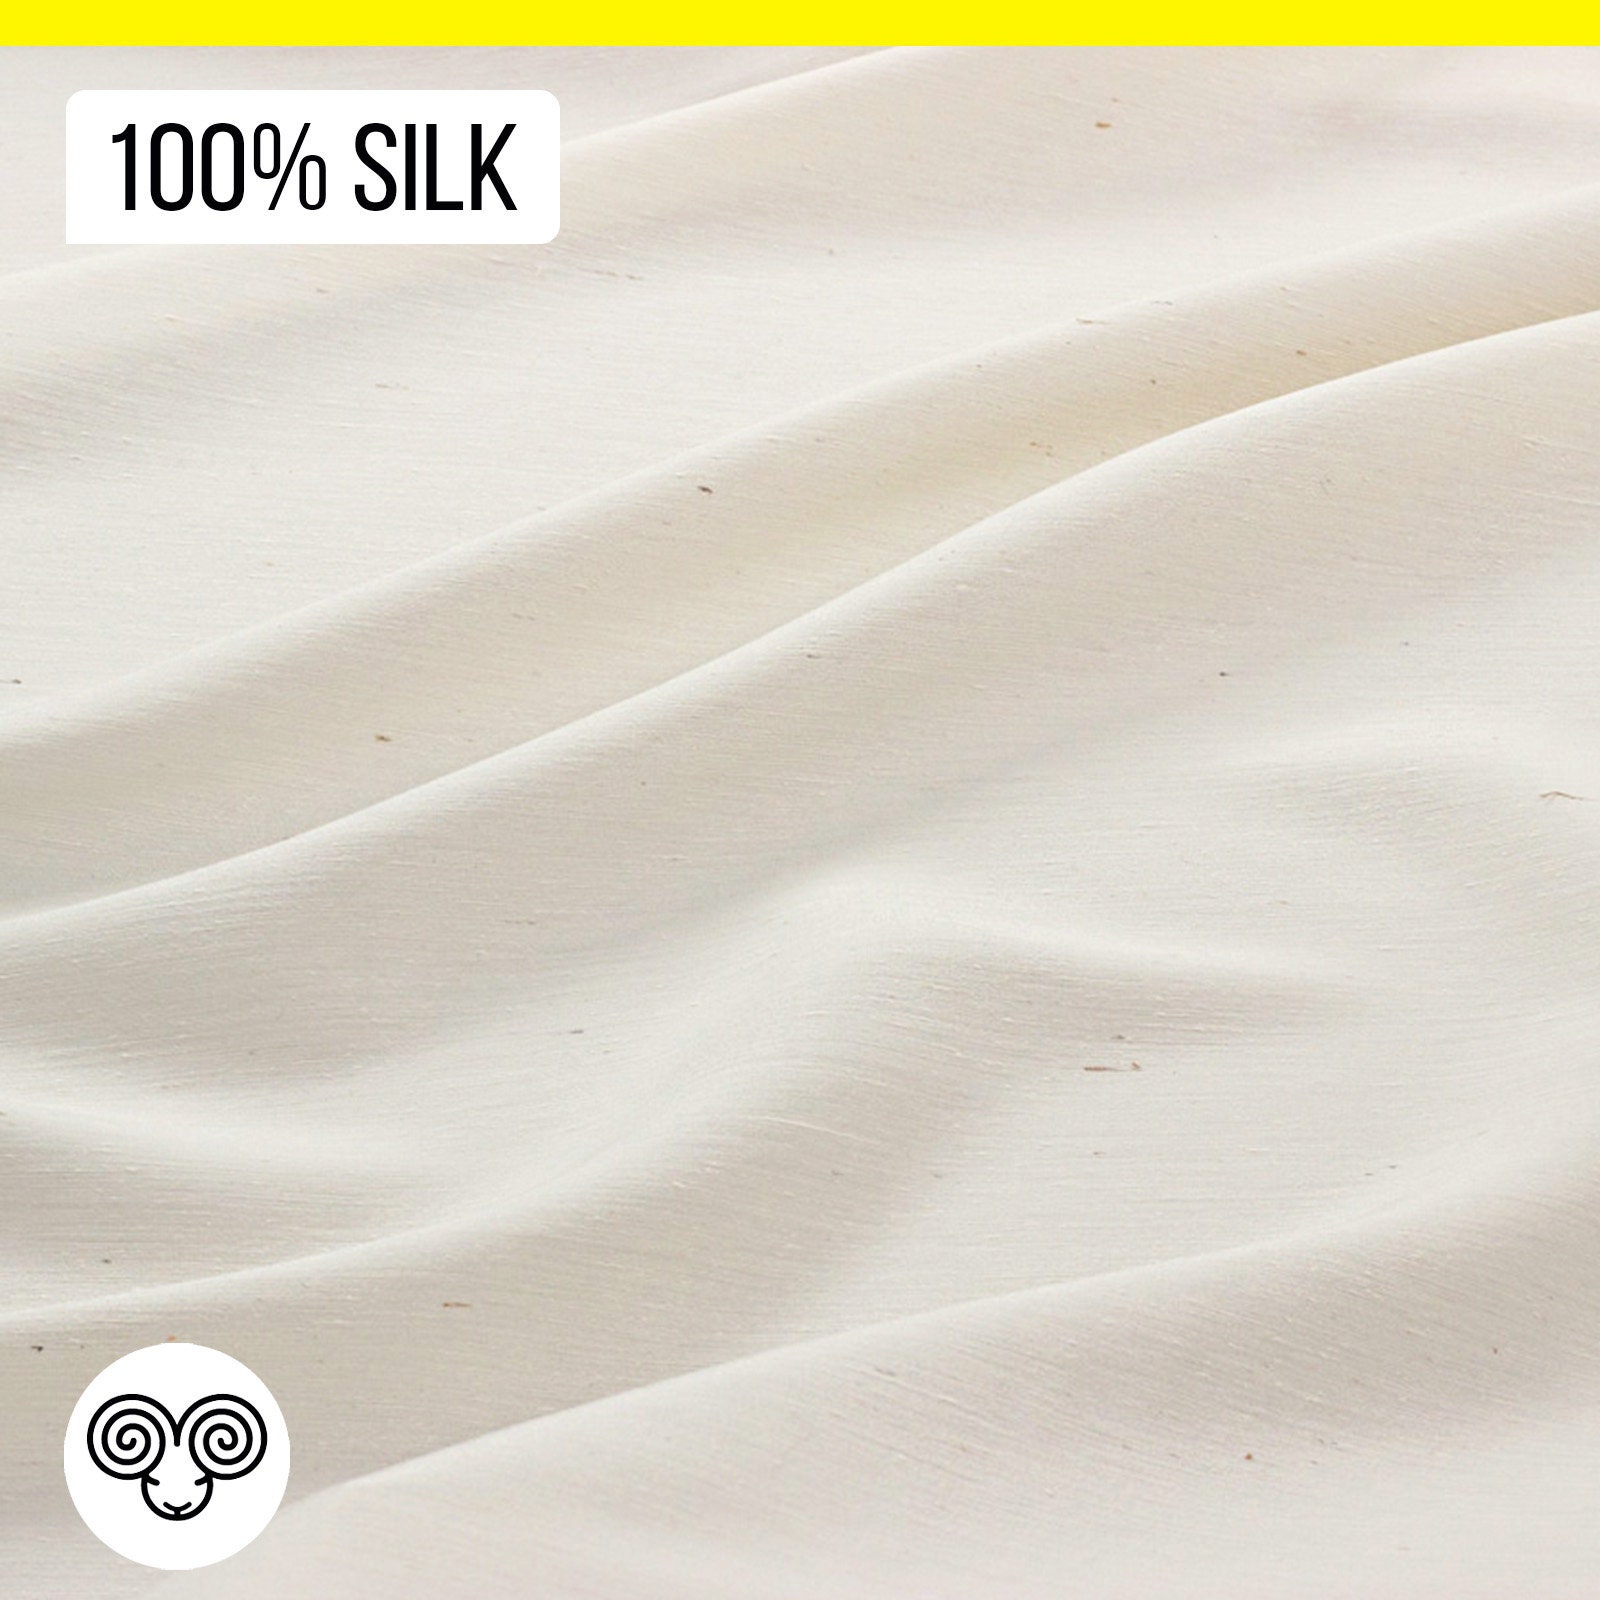 Black Silk fabric by the yard - Natural silk - Pure Mulberry Silk - Ha